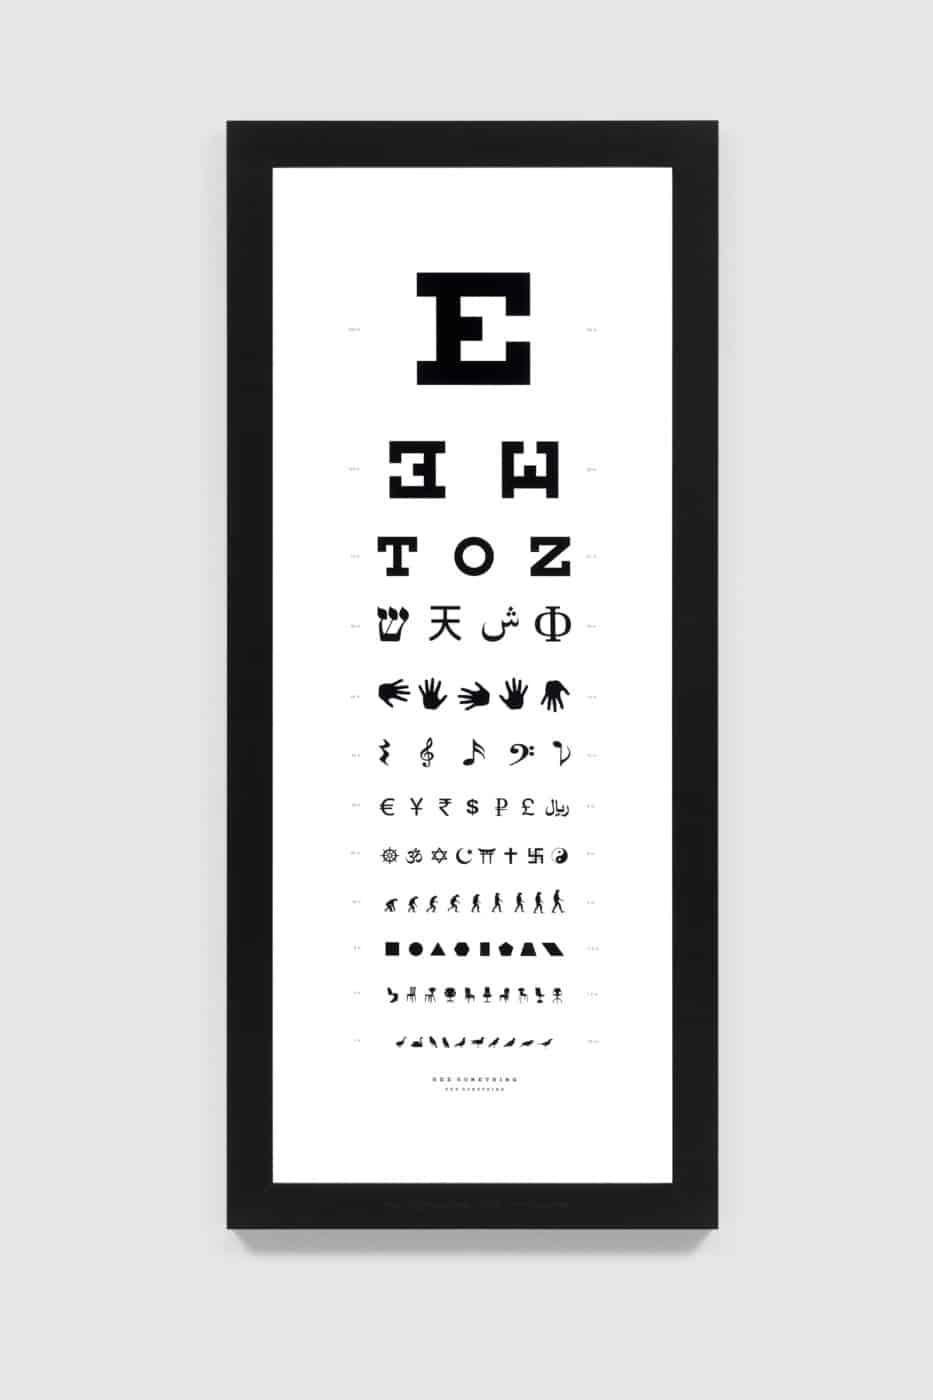 Artwork in form of eye chart by Barbara Bloom (CalArts ’72)